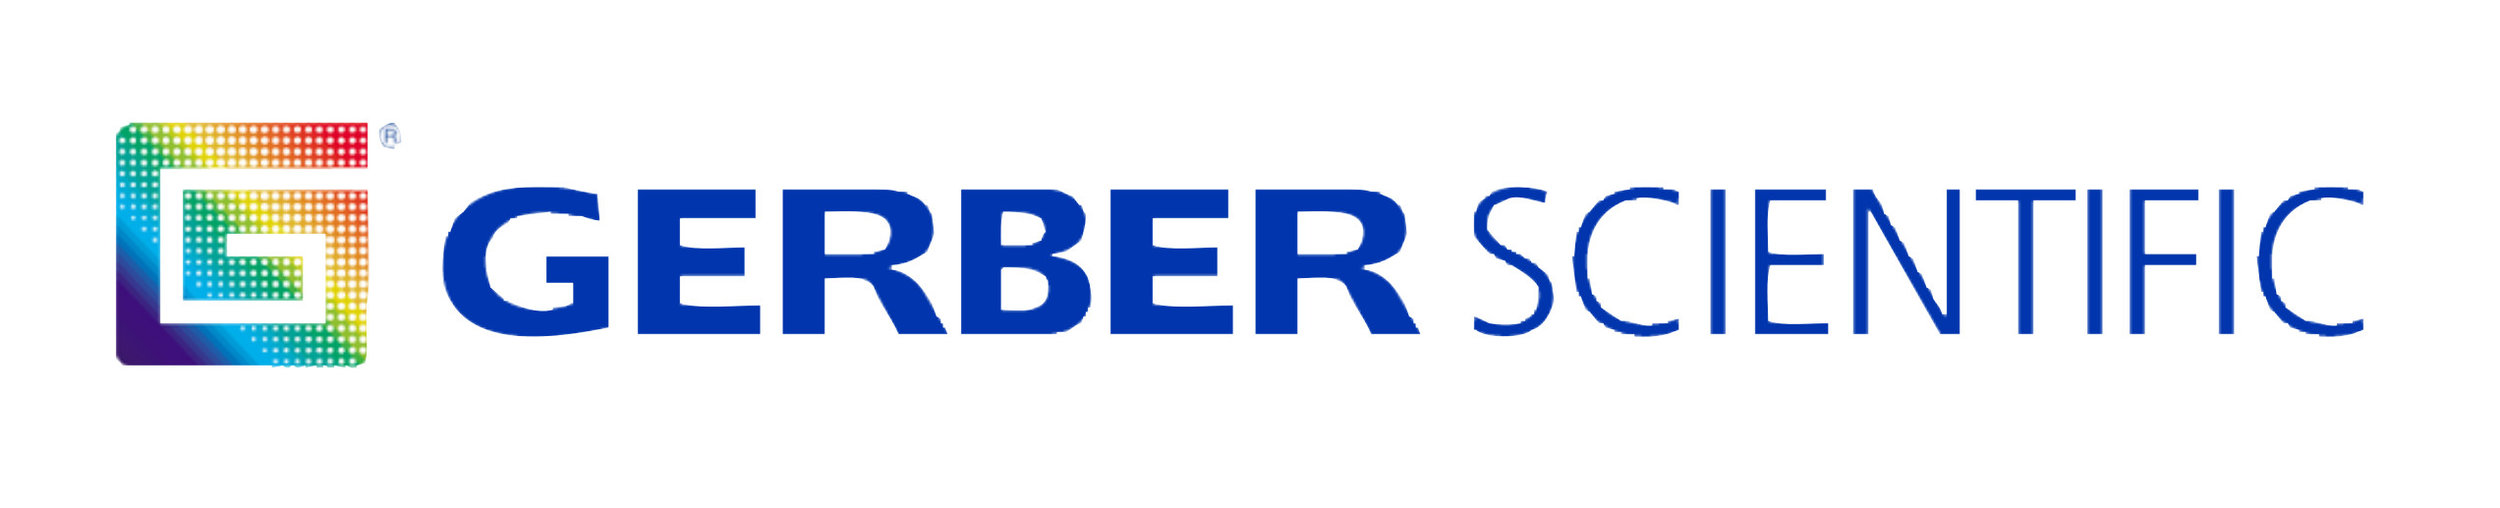 Gerber_Scientific_Logo.jpg